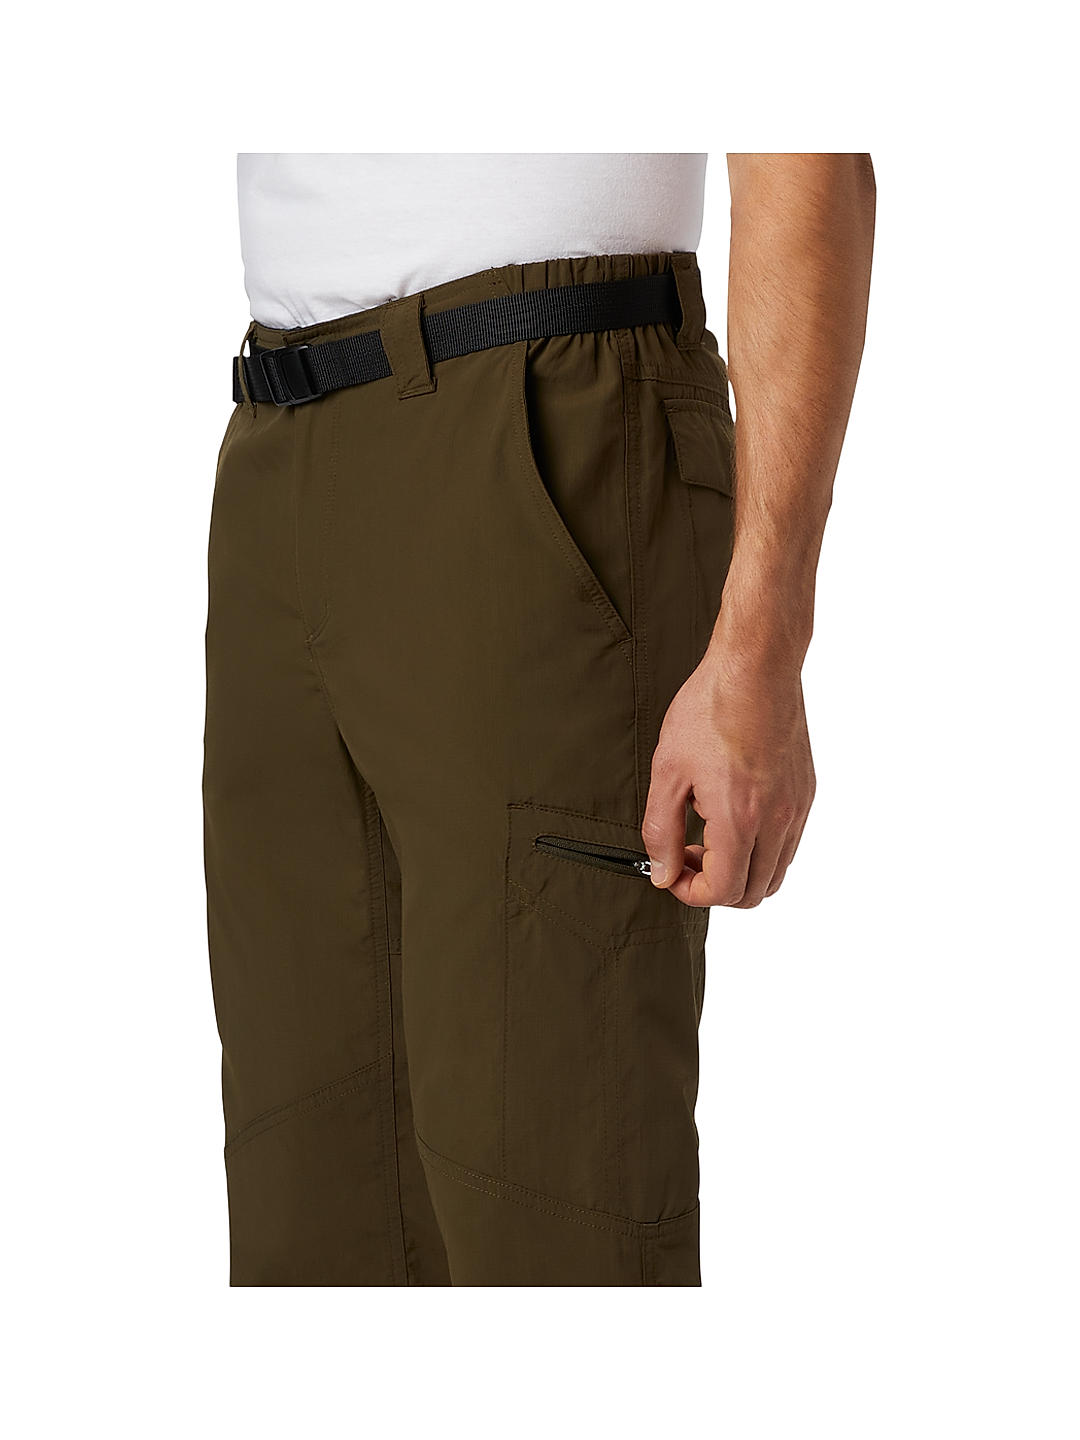 Buy Columbia Silver Ridge Cargo Pant For Men Online at Adventuras  502803